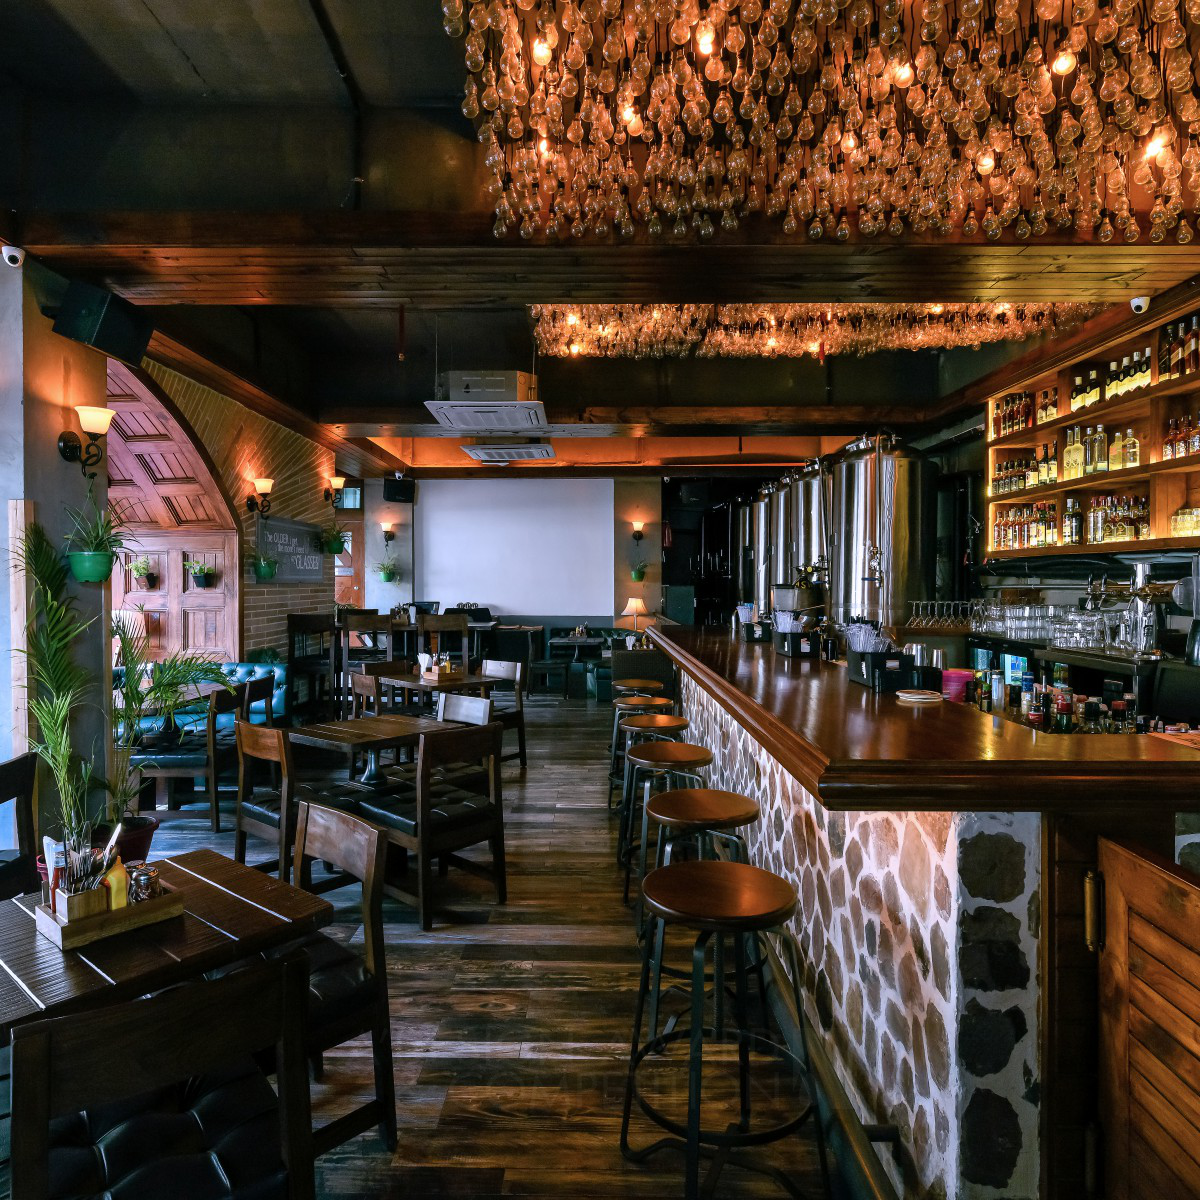 devesh pratyay Restaurant and bar